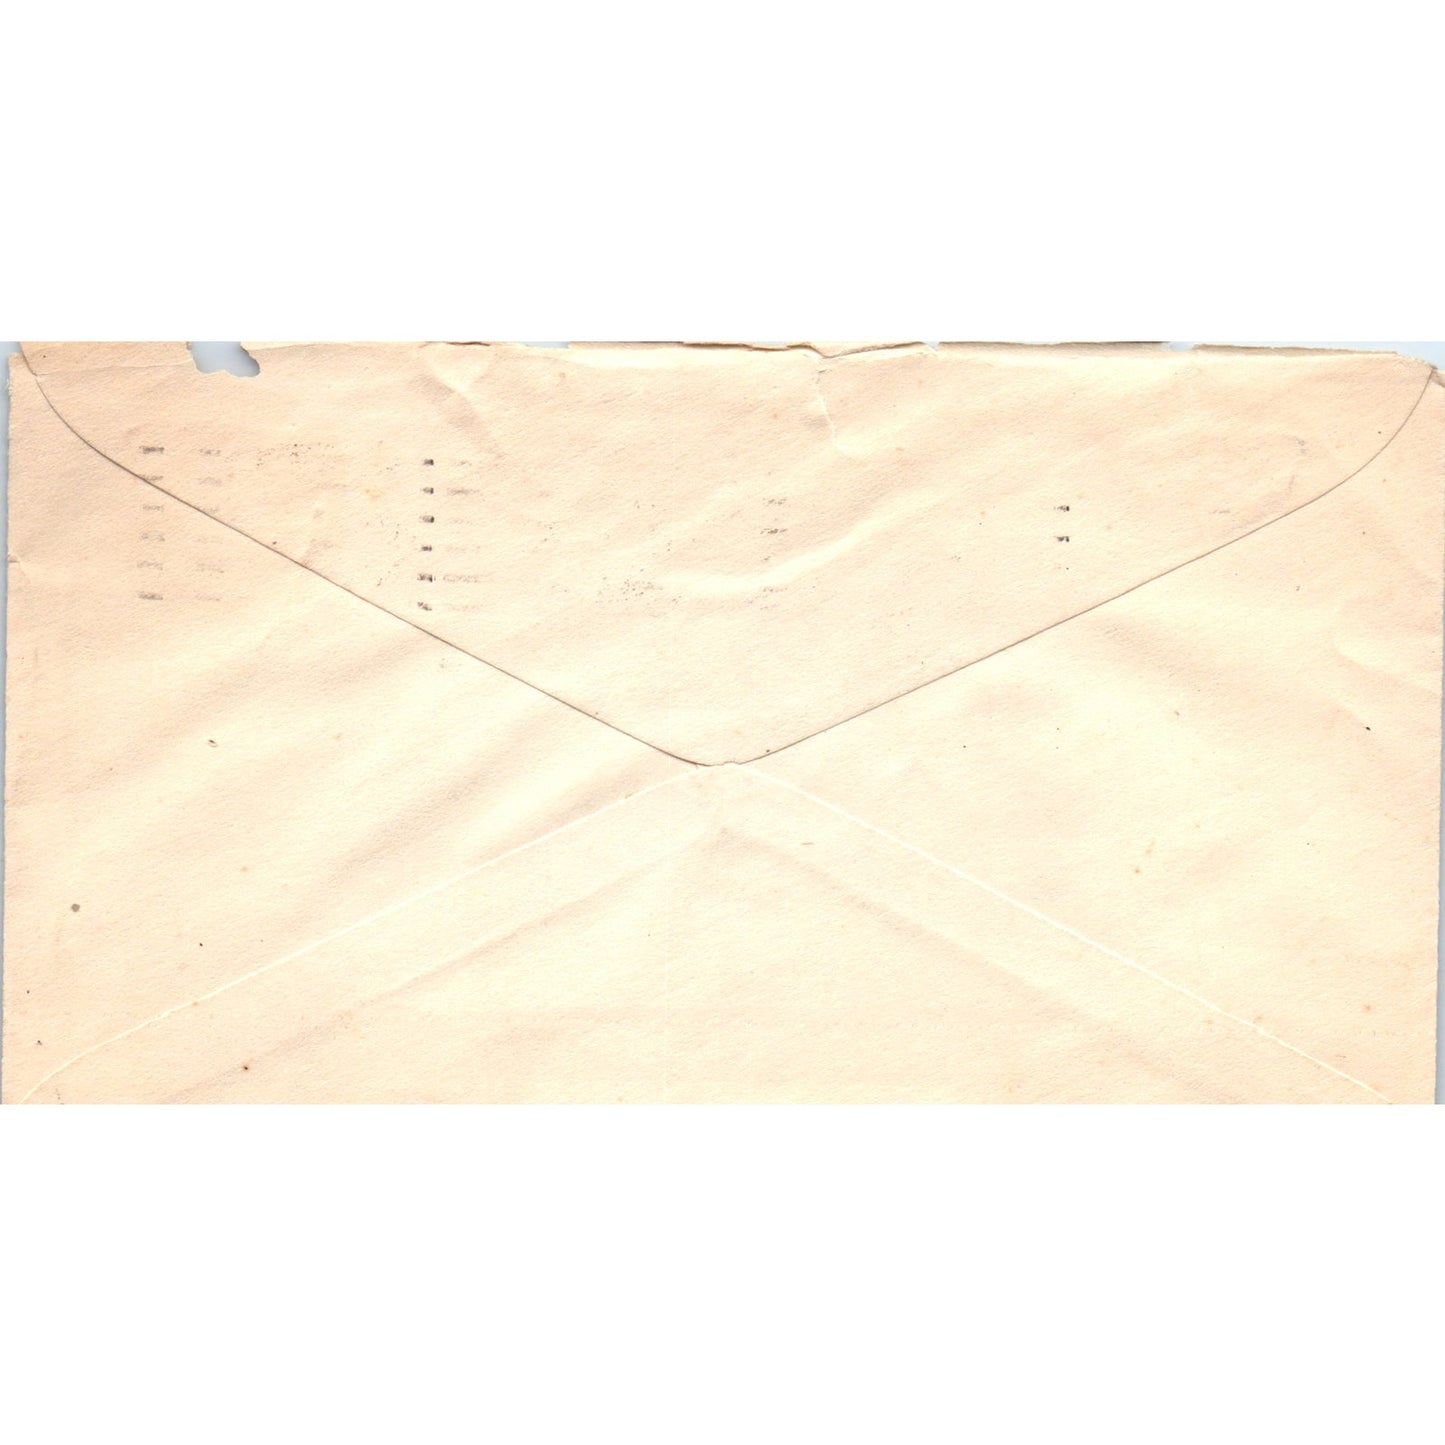 1920 S.F Scattergood & Co Philadelphia to RM High Schwenksville Envelope TG7-PC2